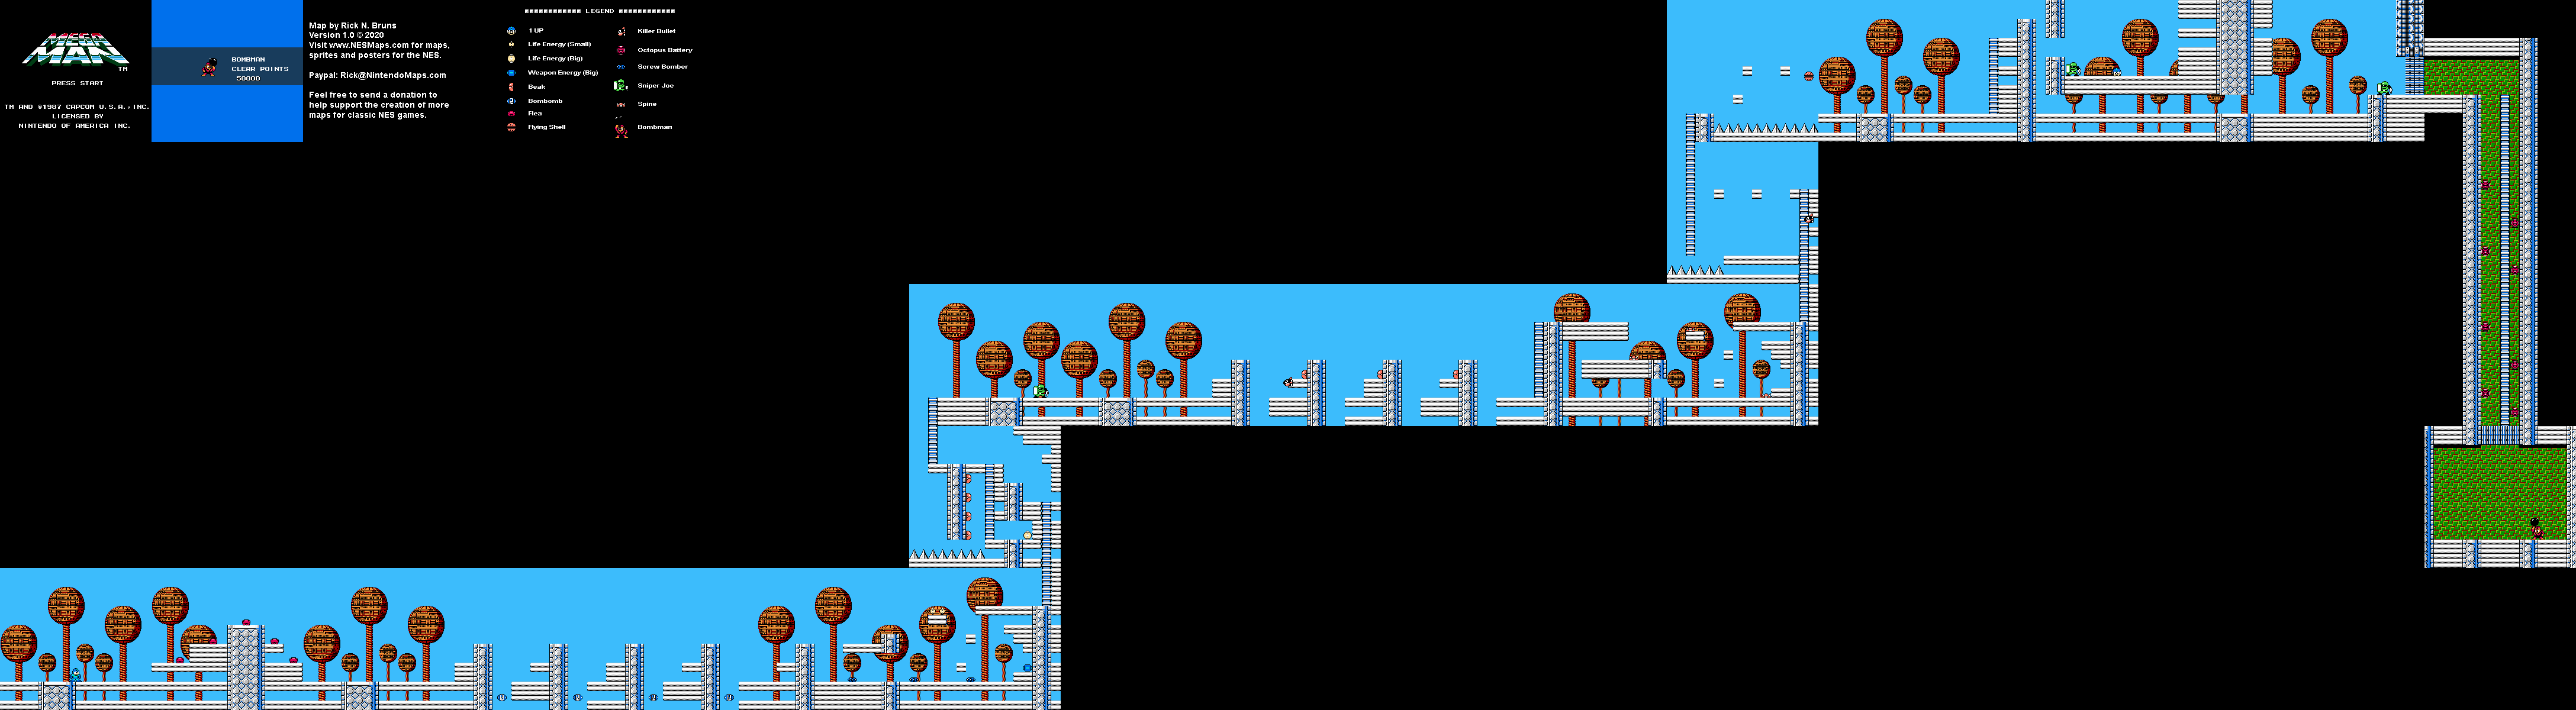 Mega Man - Bomb Man Stage Nintendo NES Map